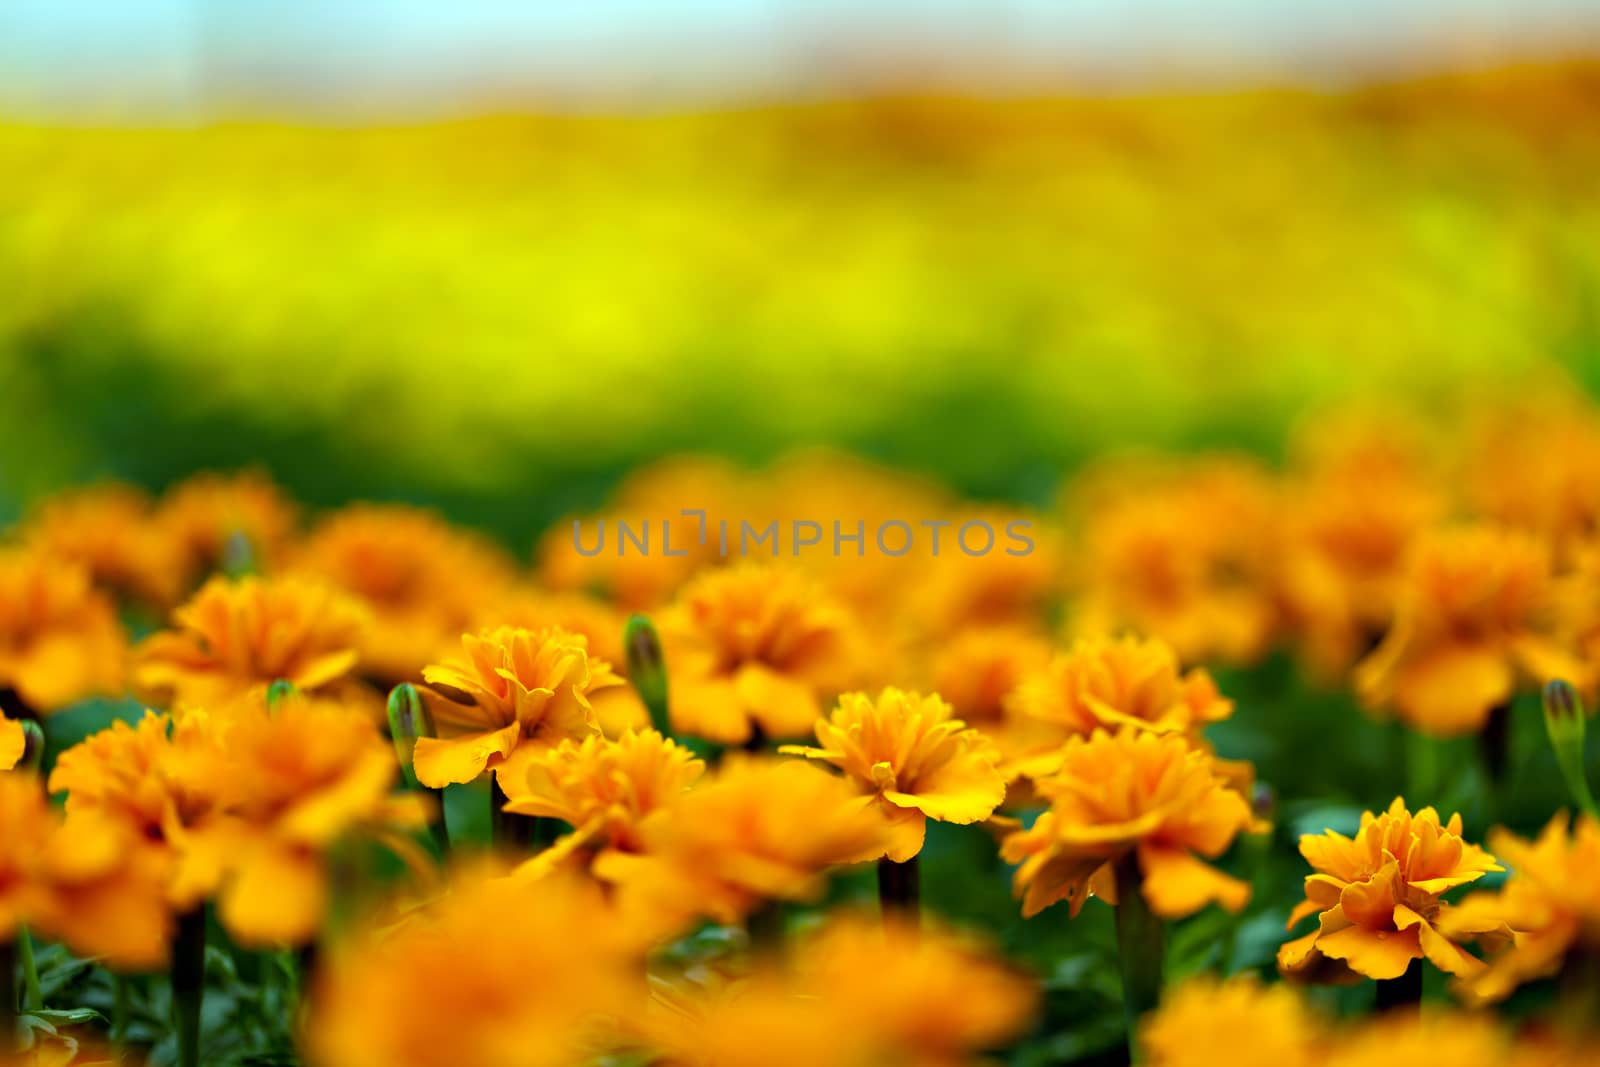 Orange marigold flower plants macro closeup with a shallow depth of field.